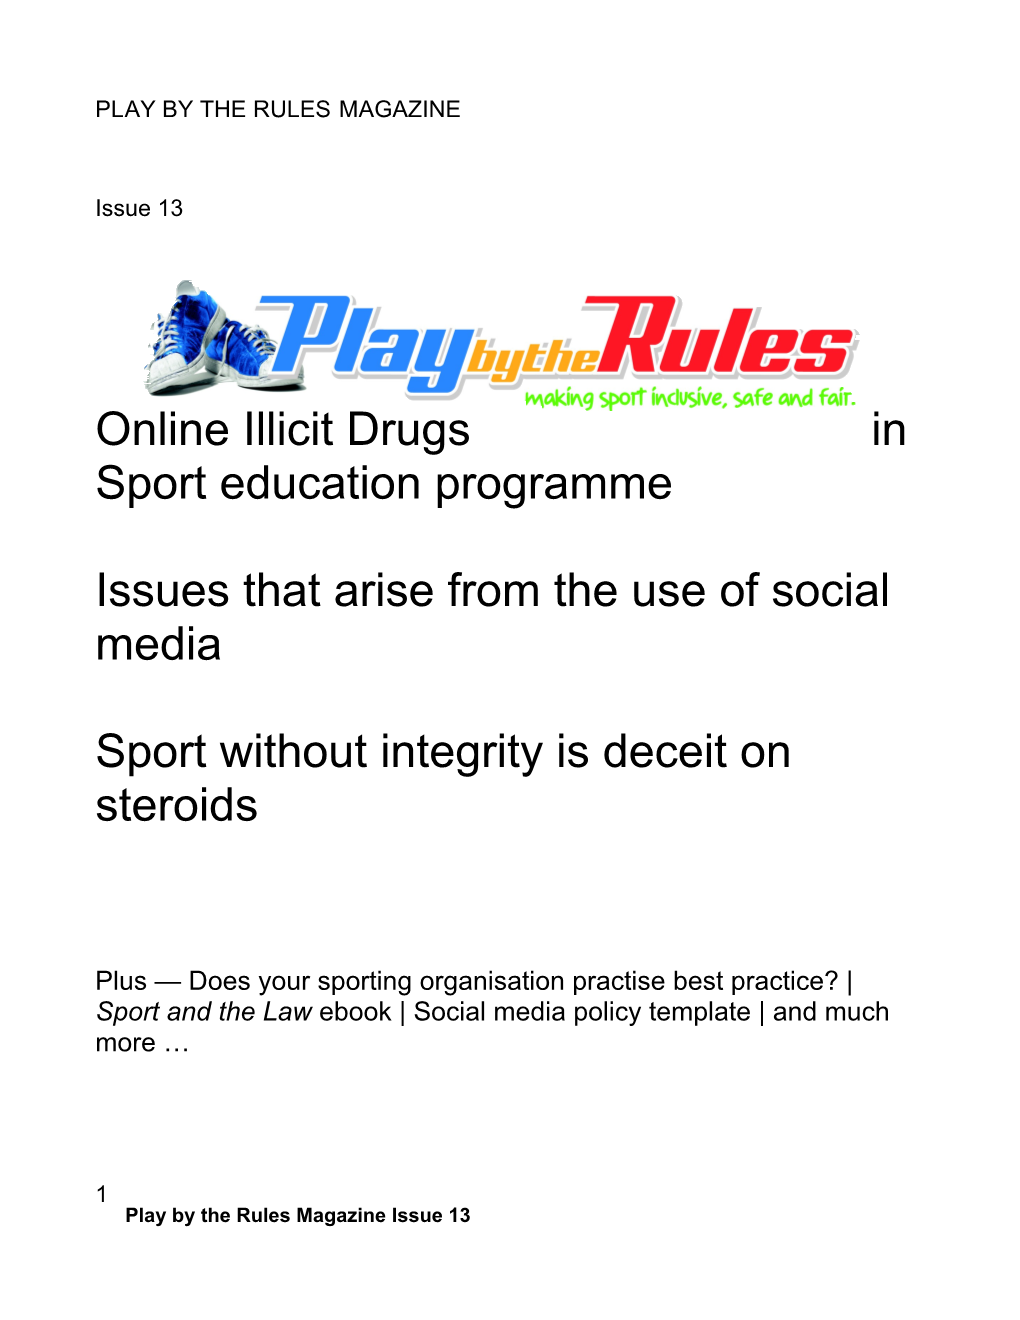 Online Illicit Drugs in Sport Education Programme